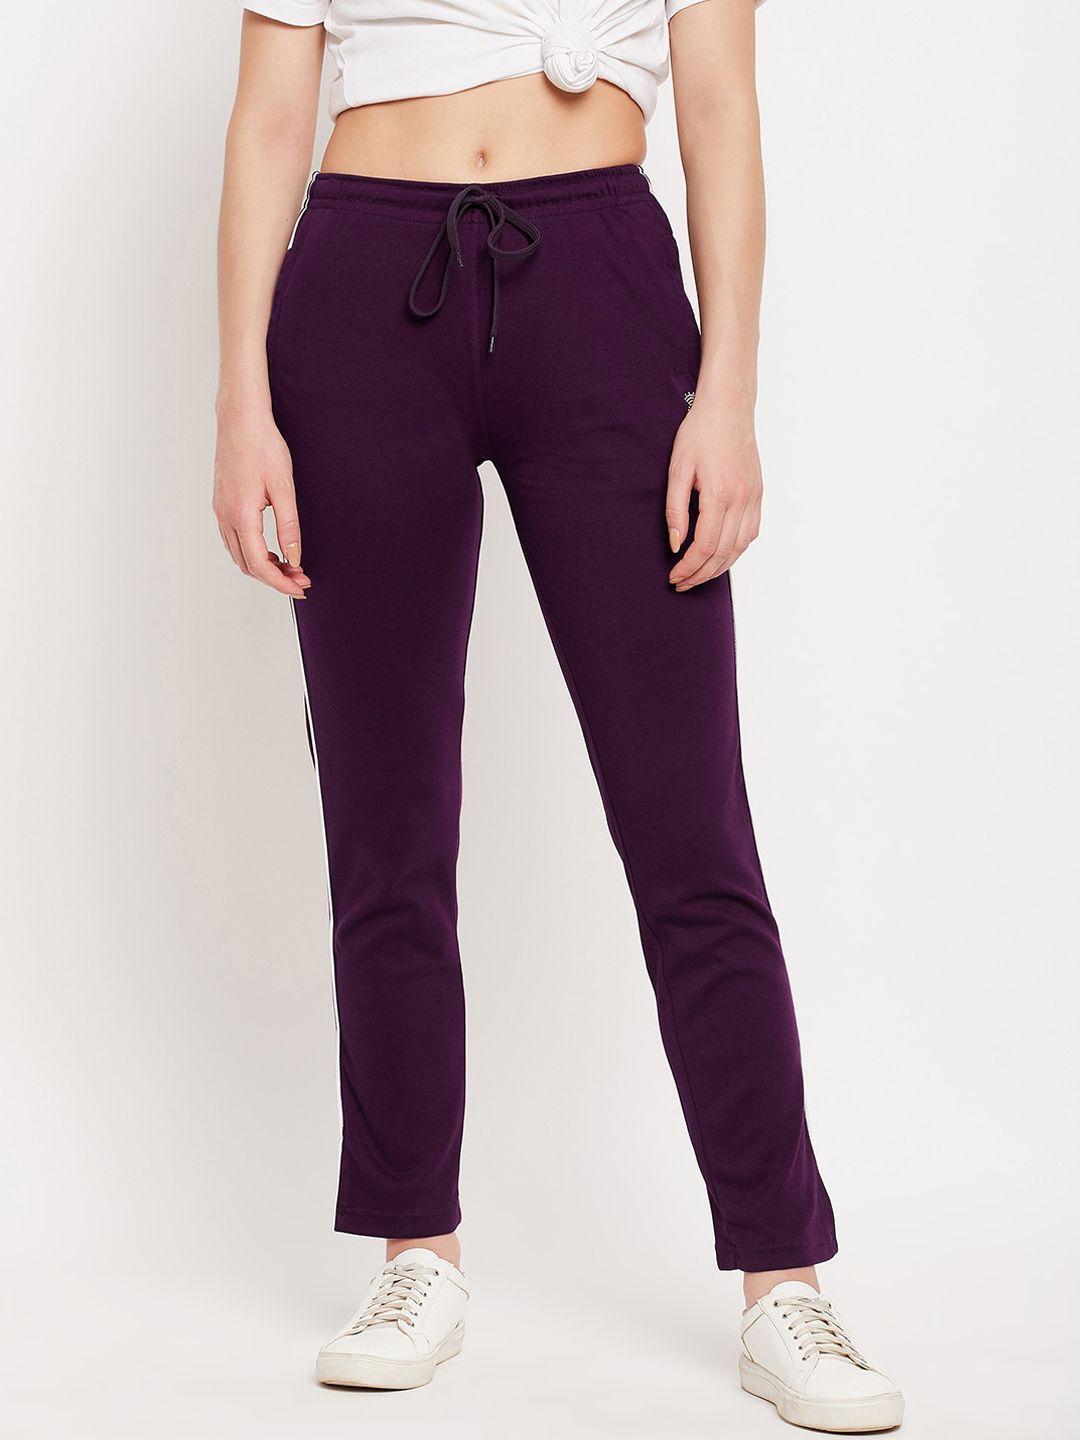 duke women purple solid track pants